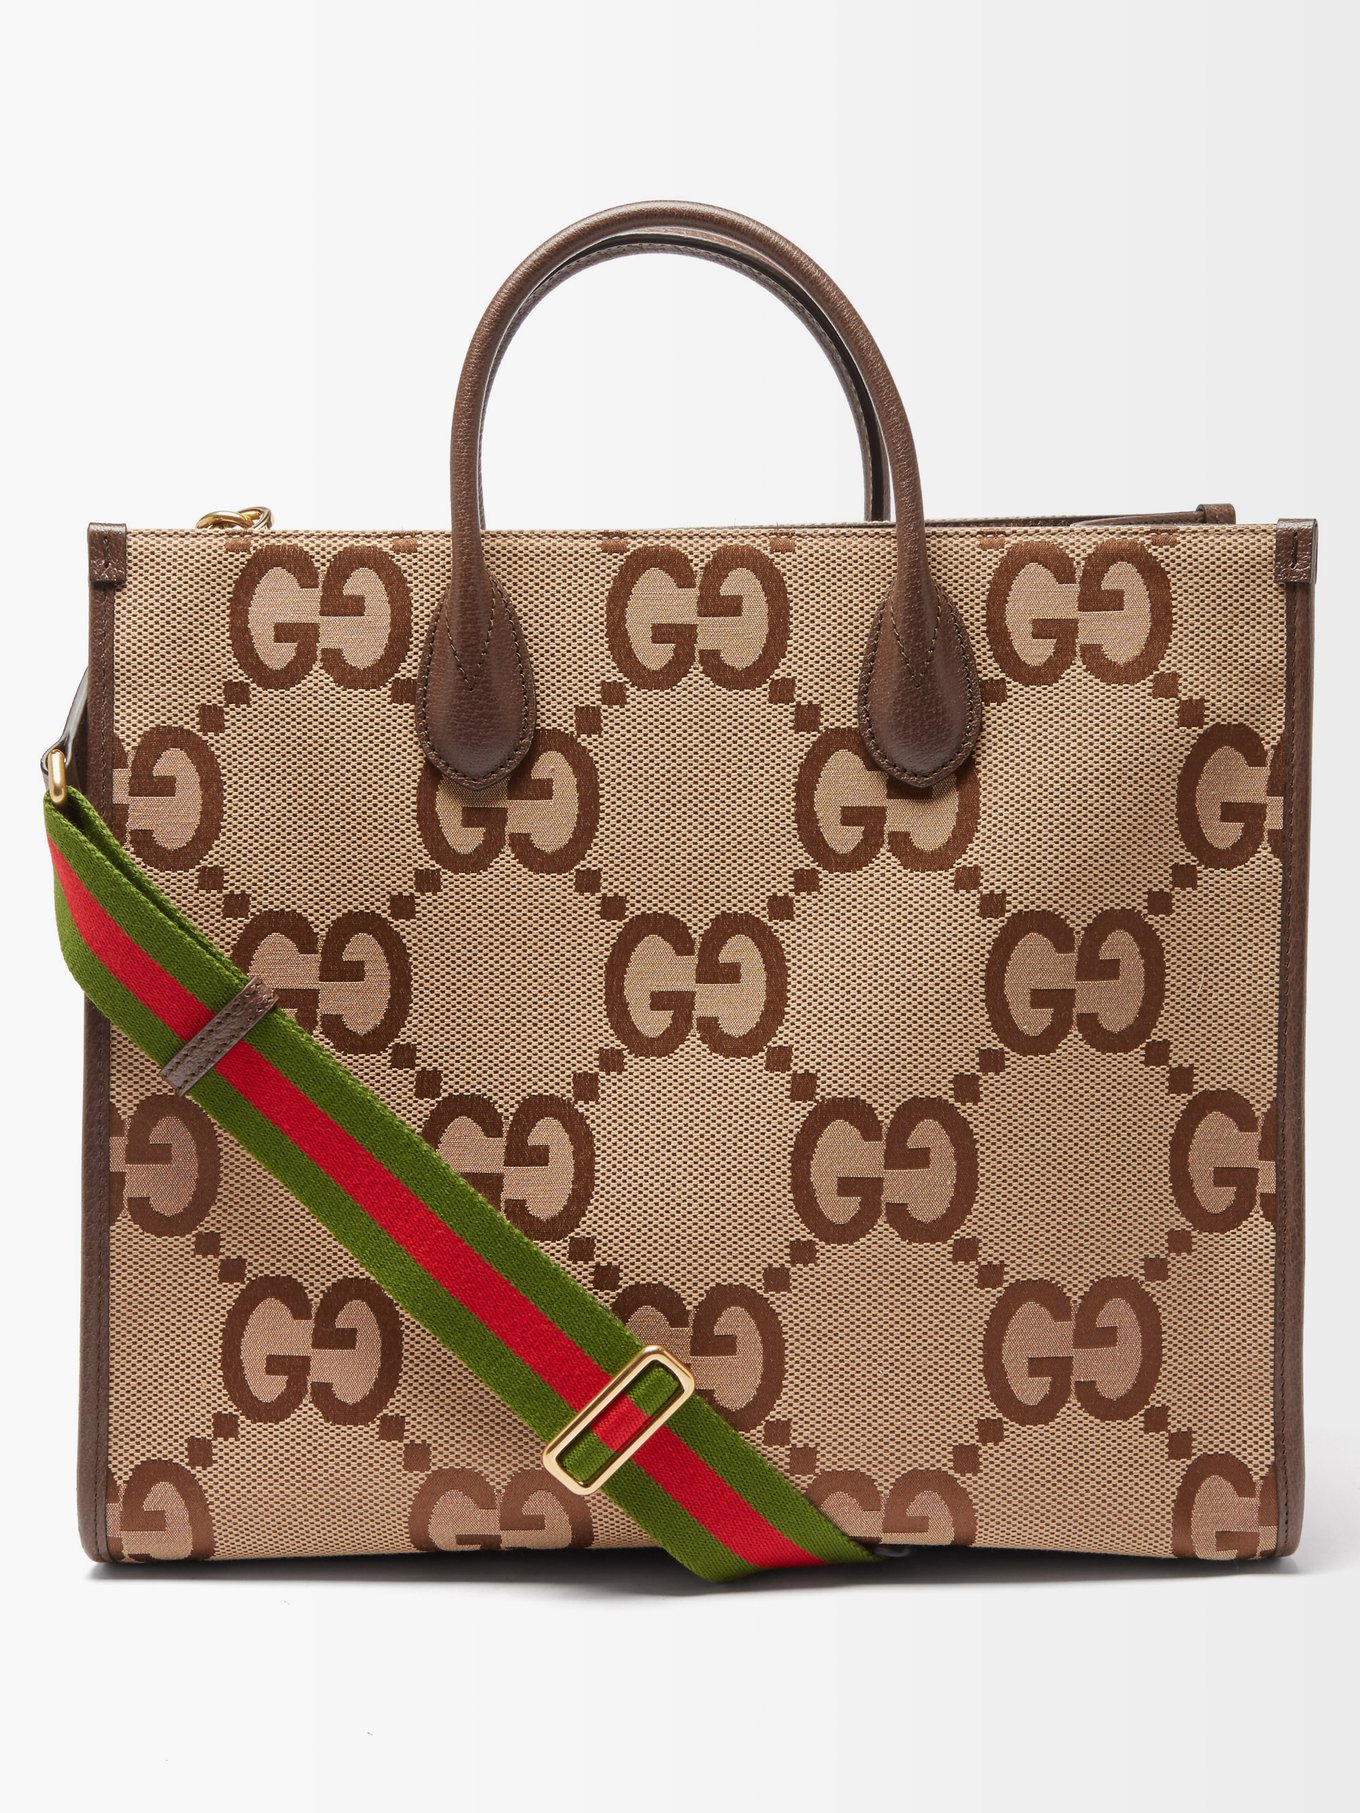 GG small tote bag